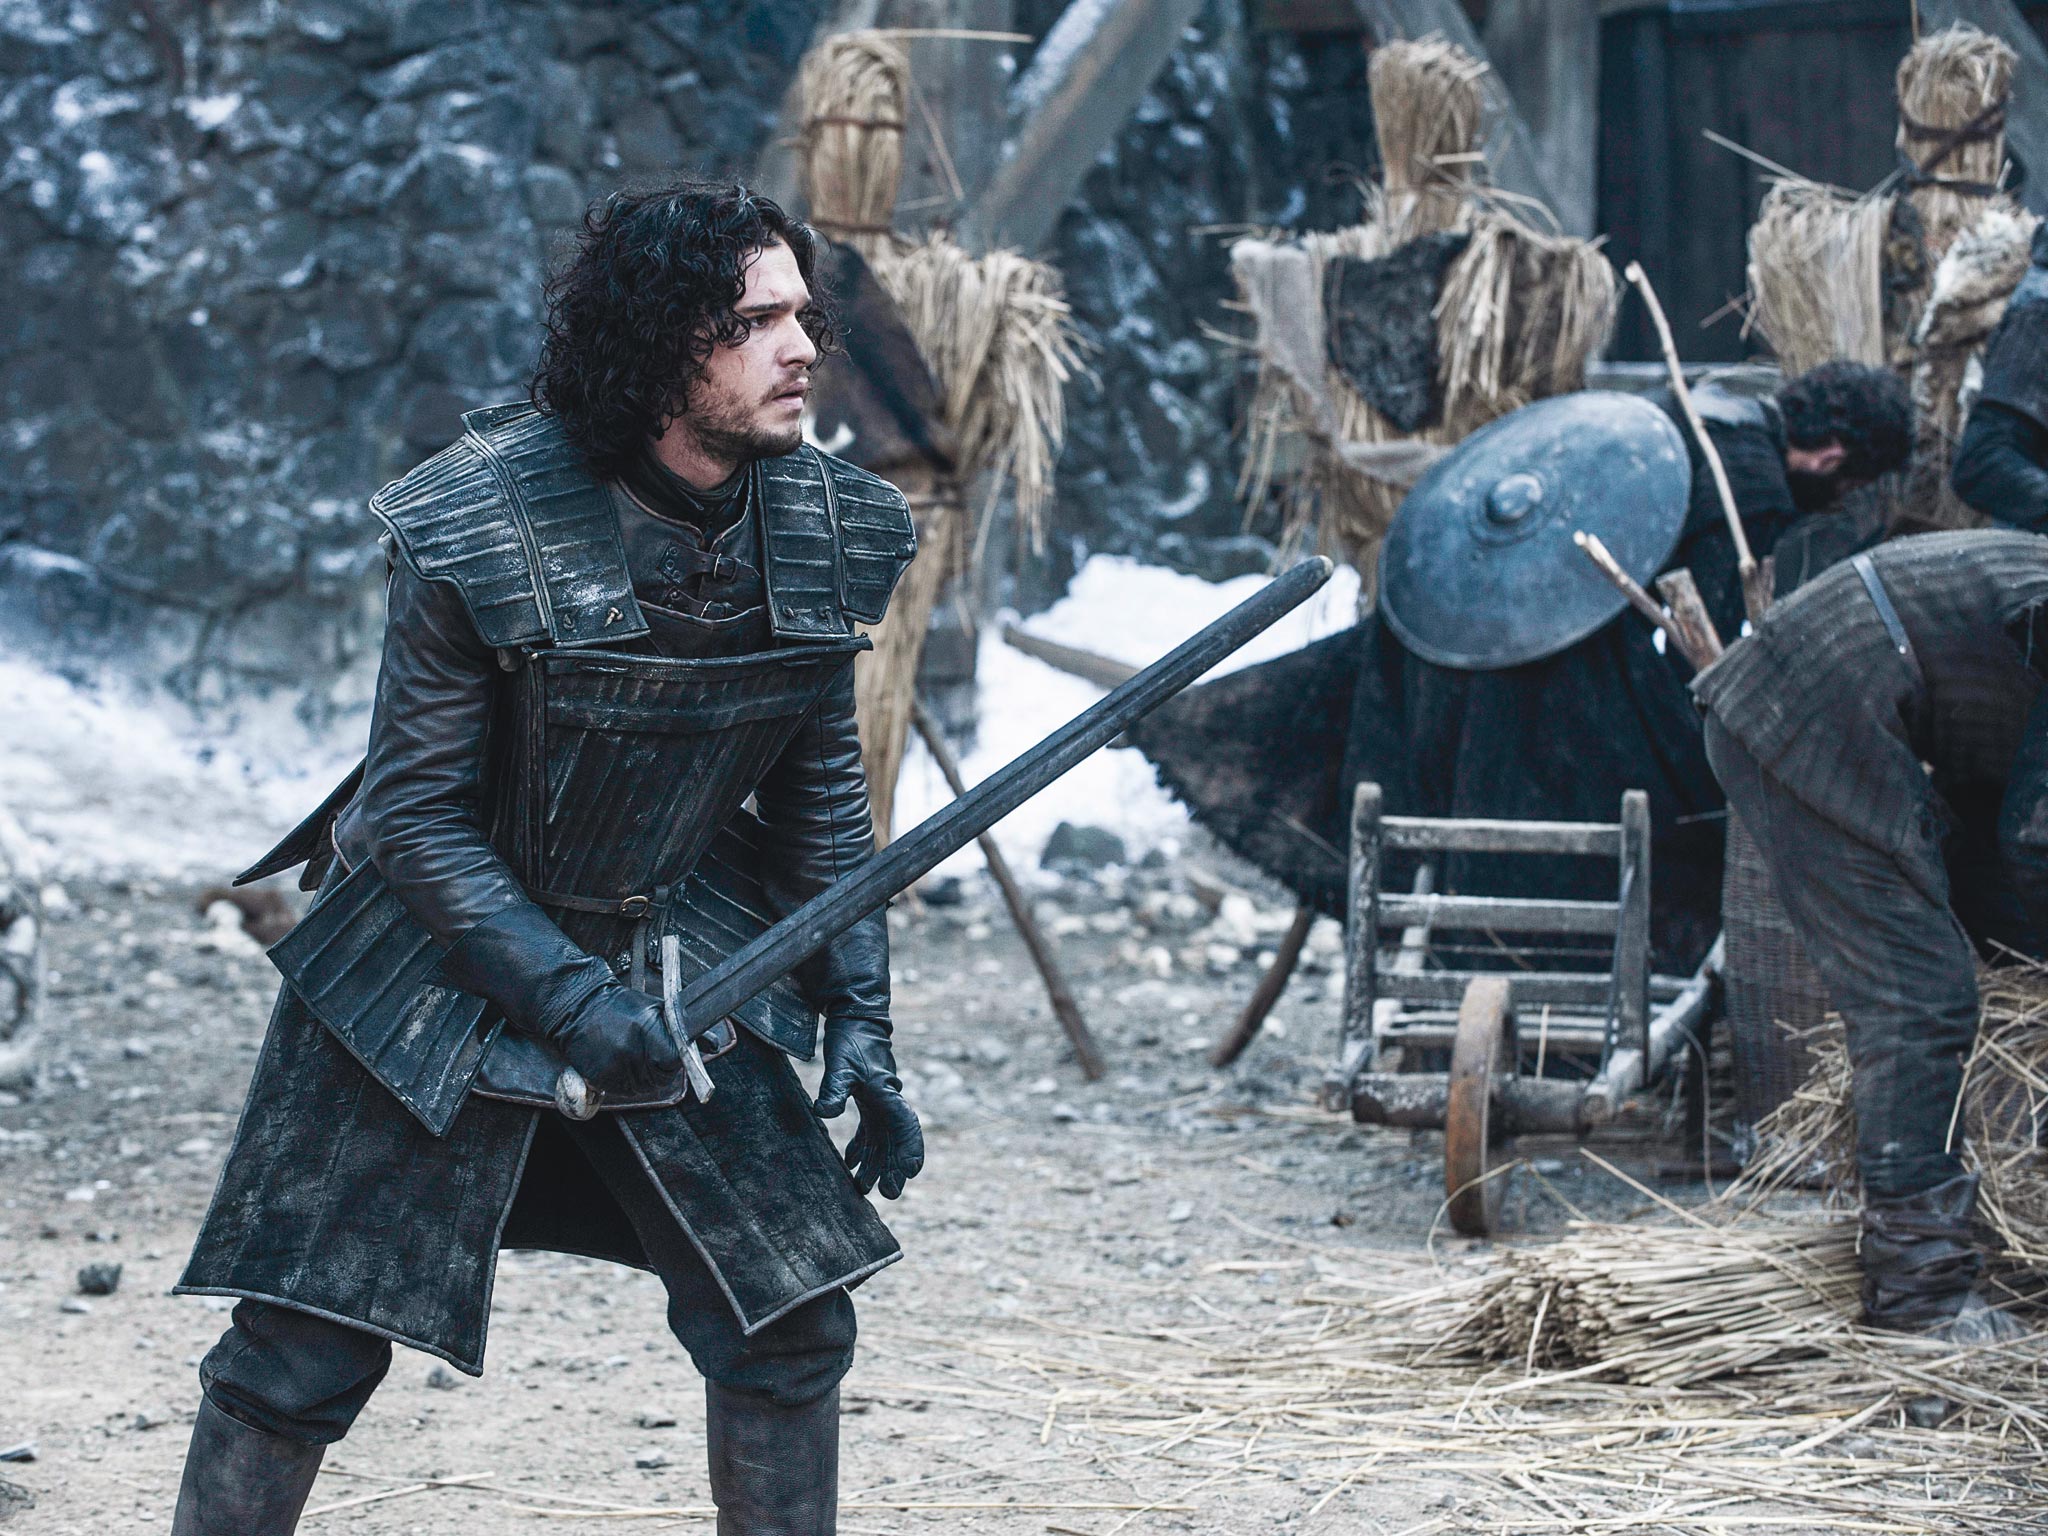 Jon Snow trains for battle against the wildings at Castle Black